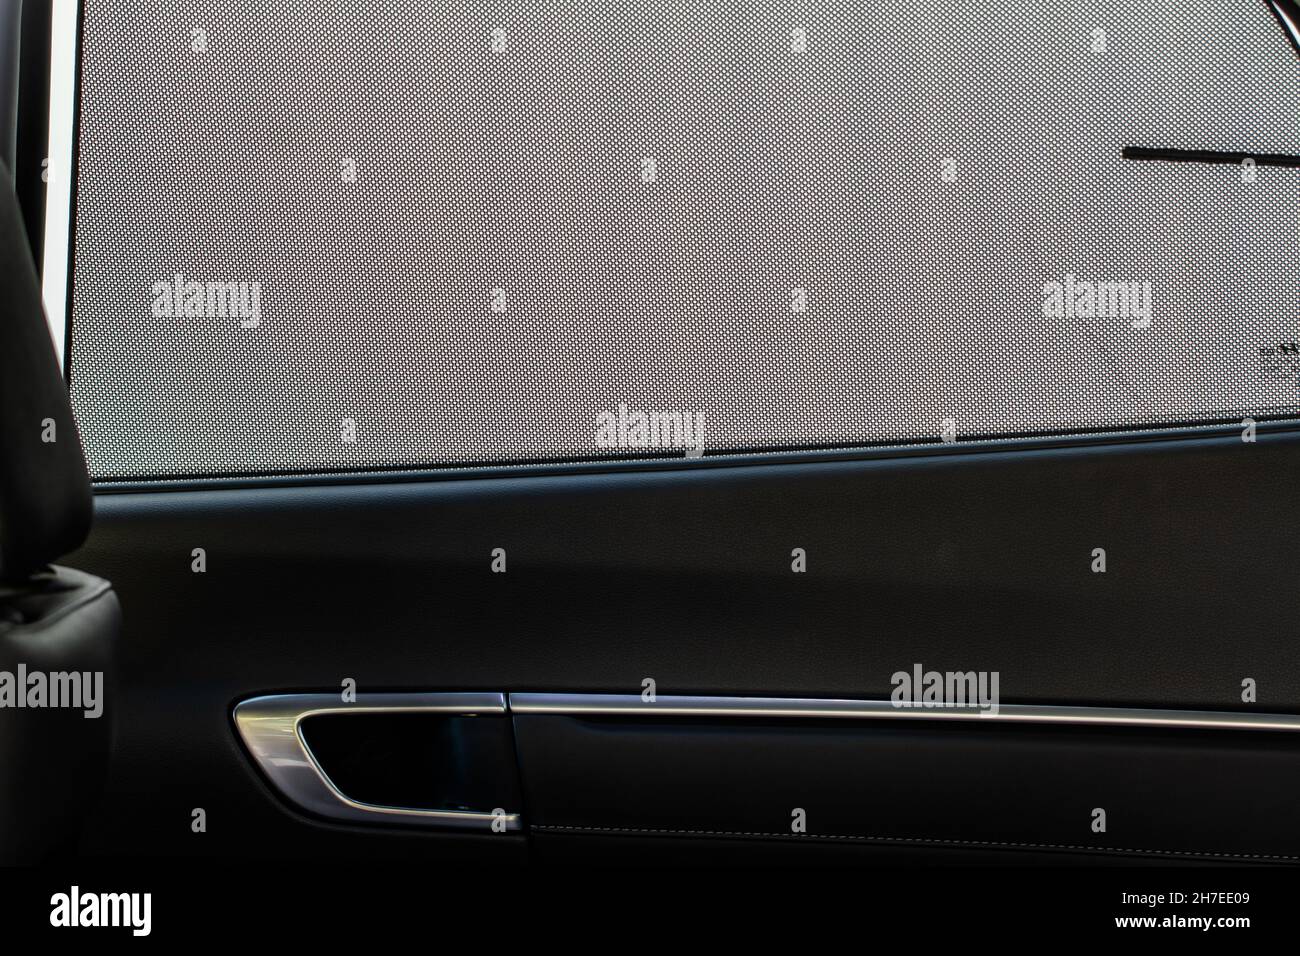 Sun visor car hi-res stock photography and images - Alamy